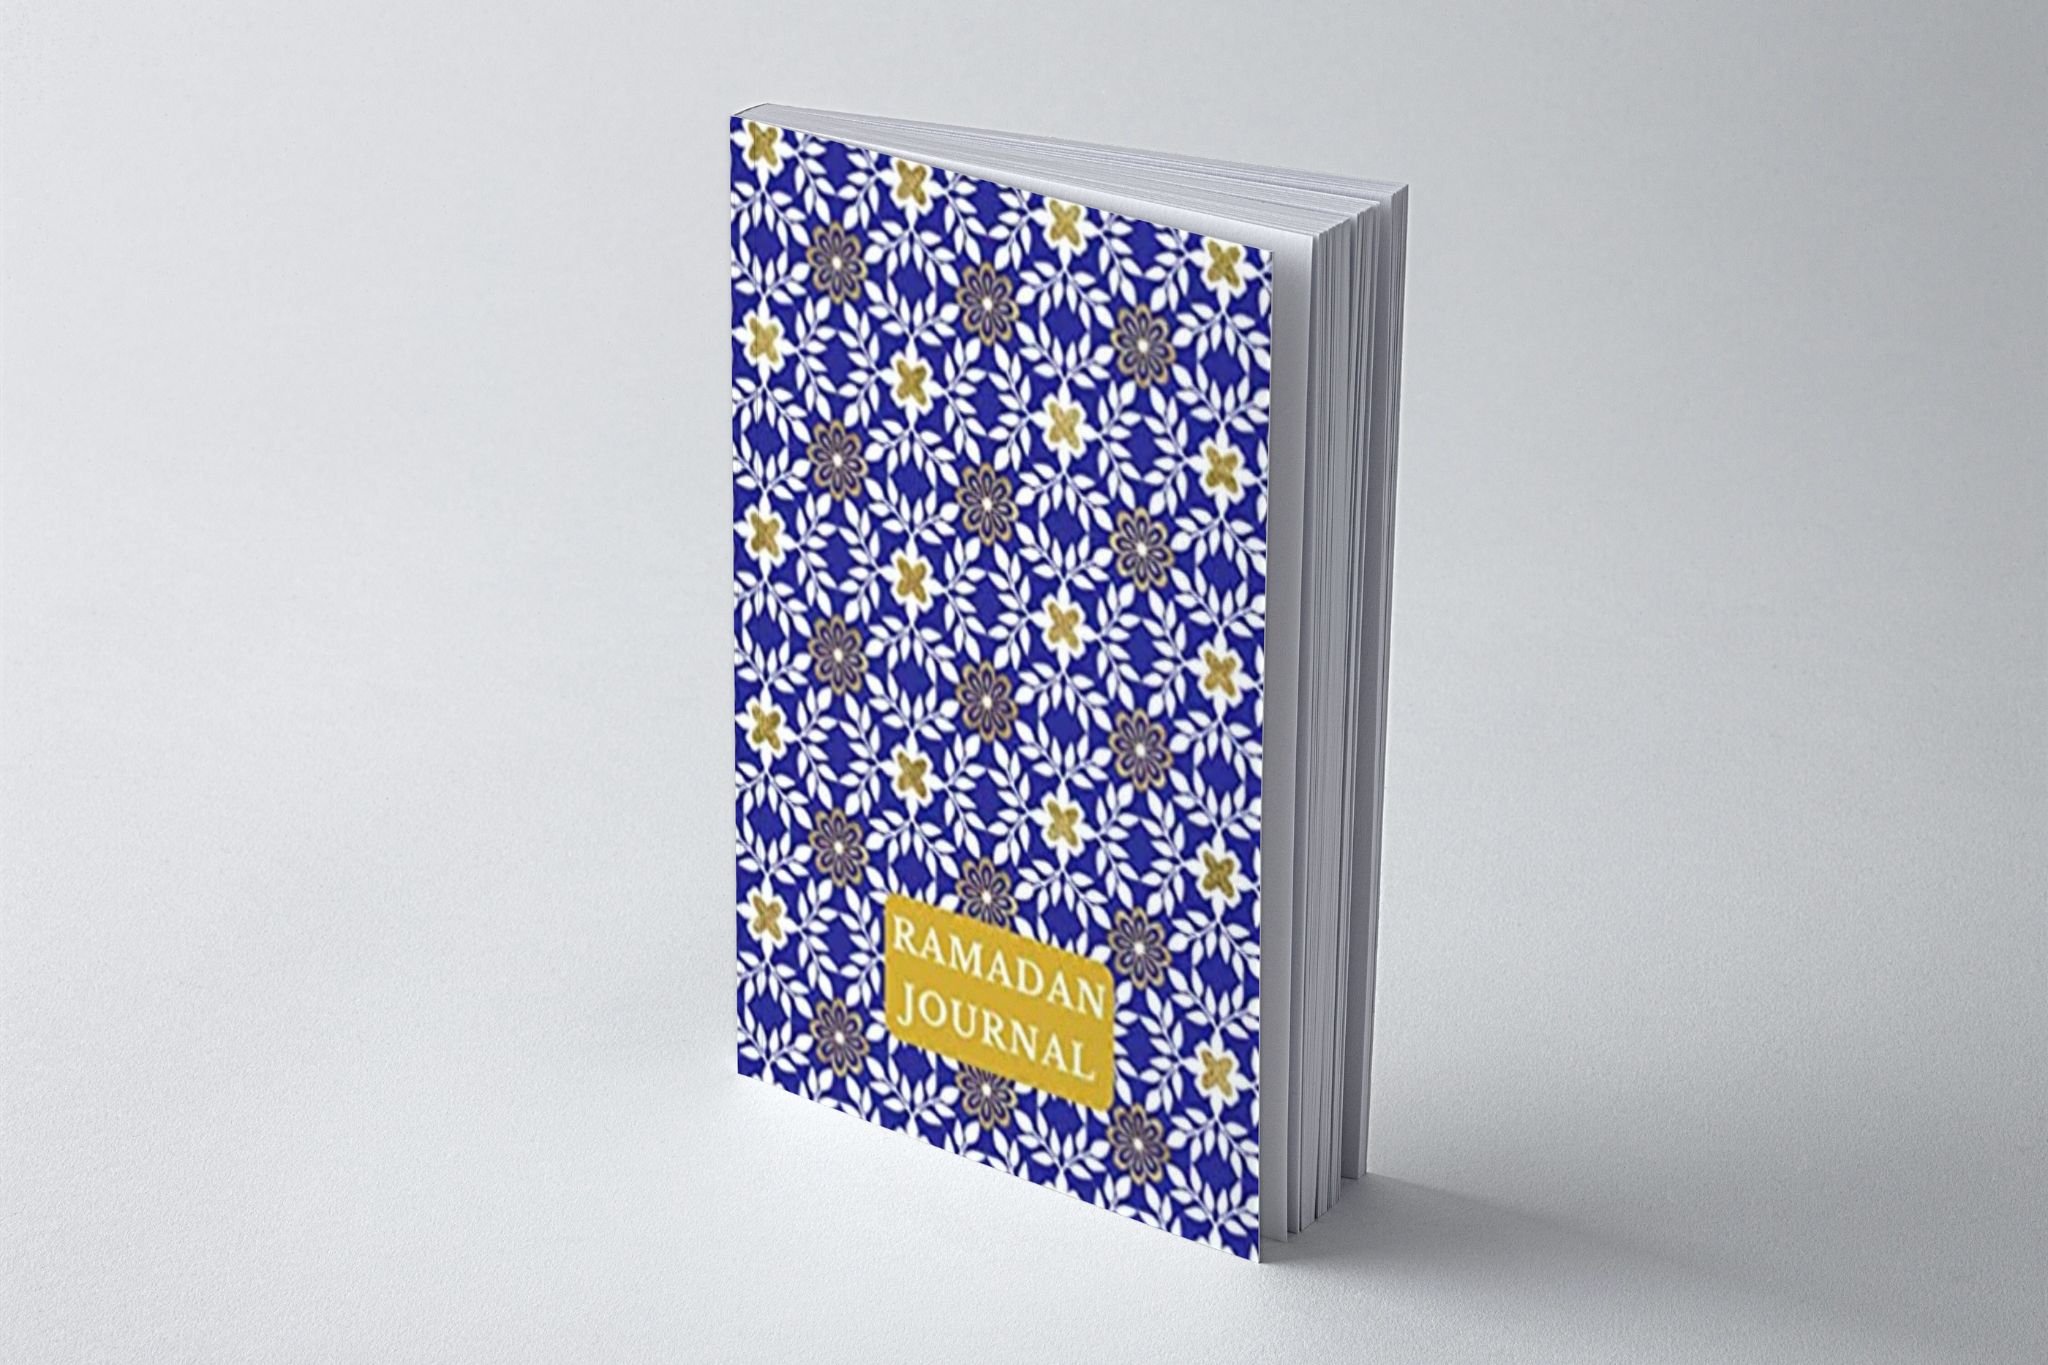 Ramadan Journal 2.jpg